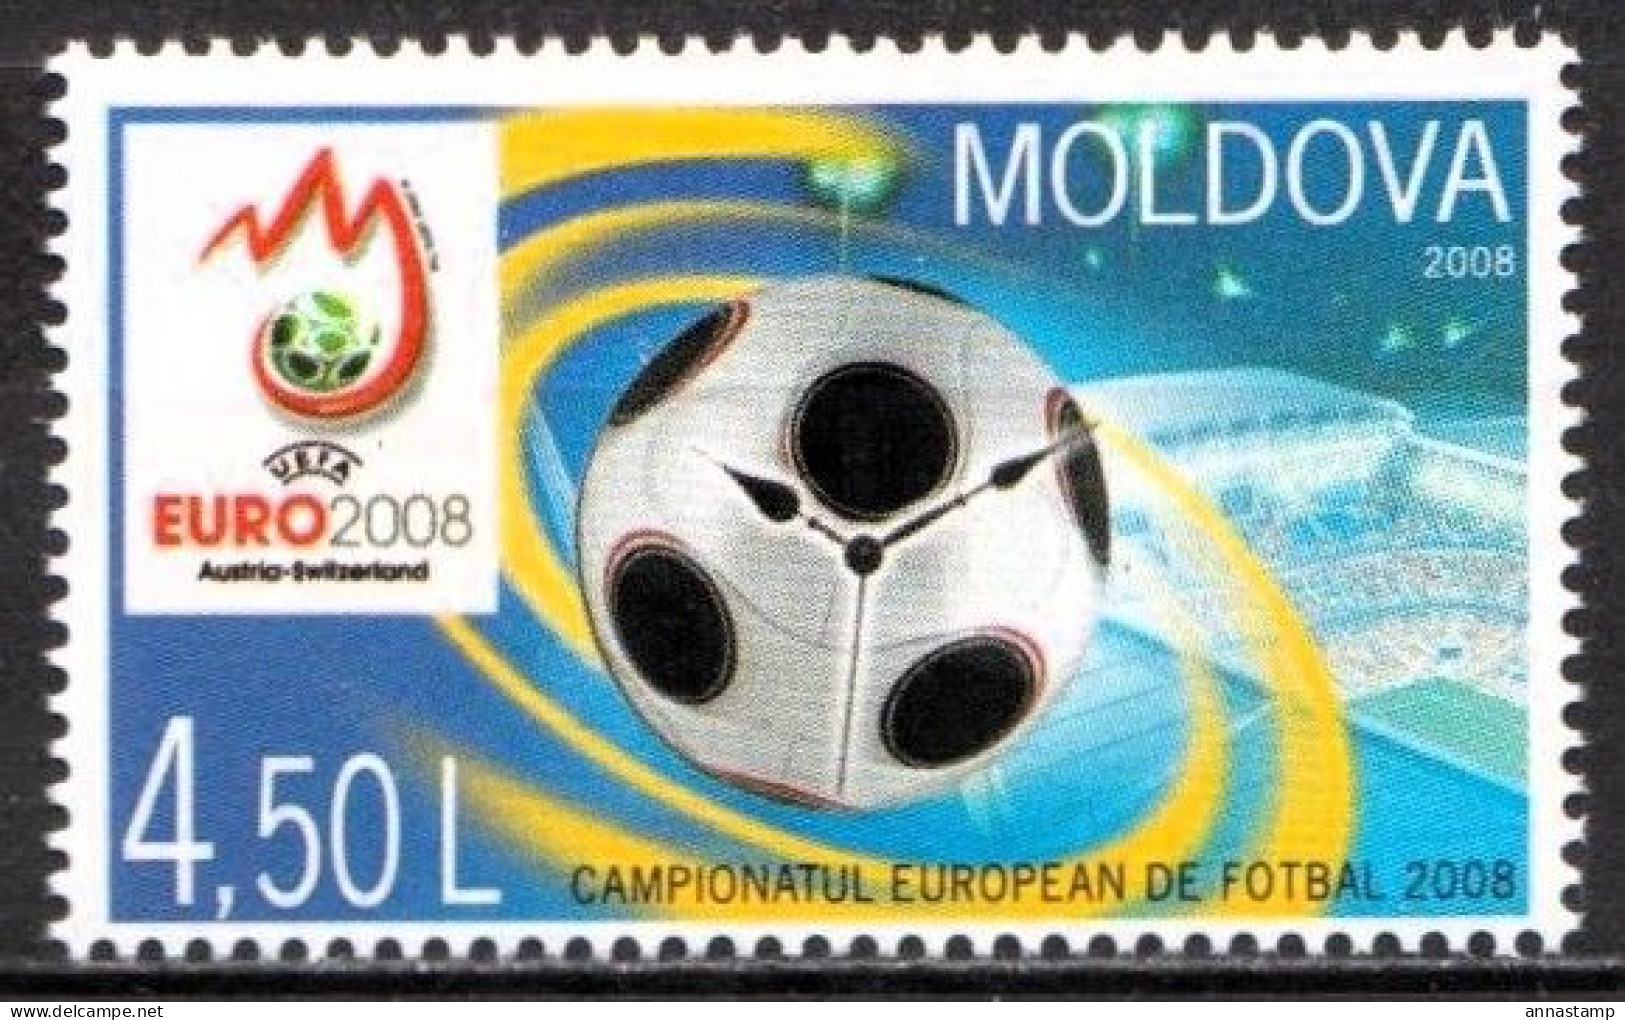 Moldova MNH Stamp - UEFA European Championship